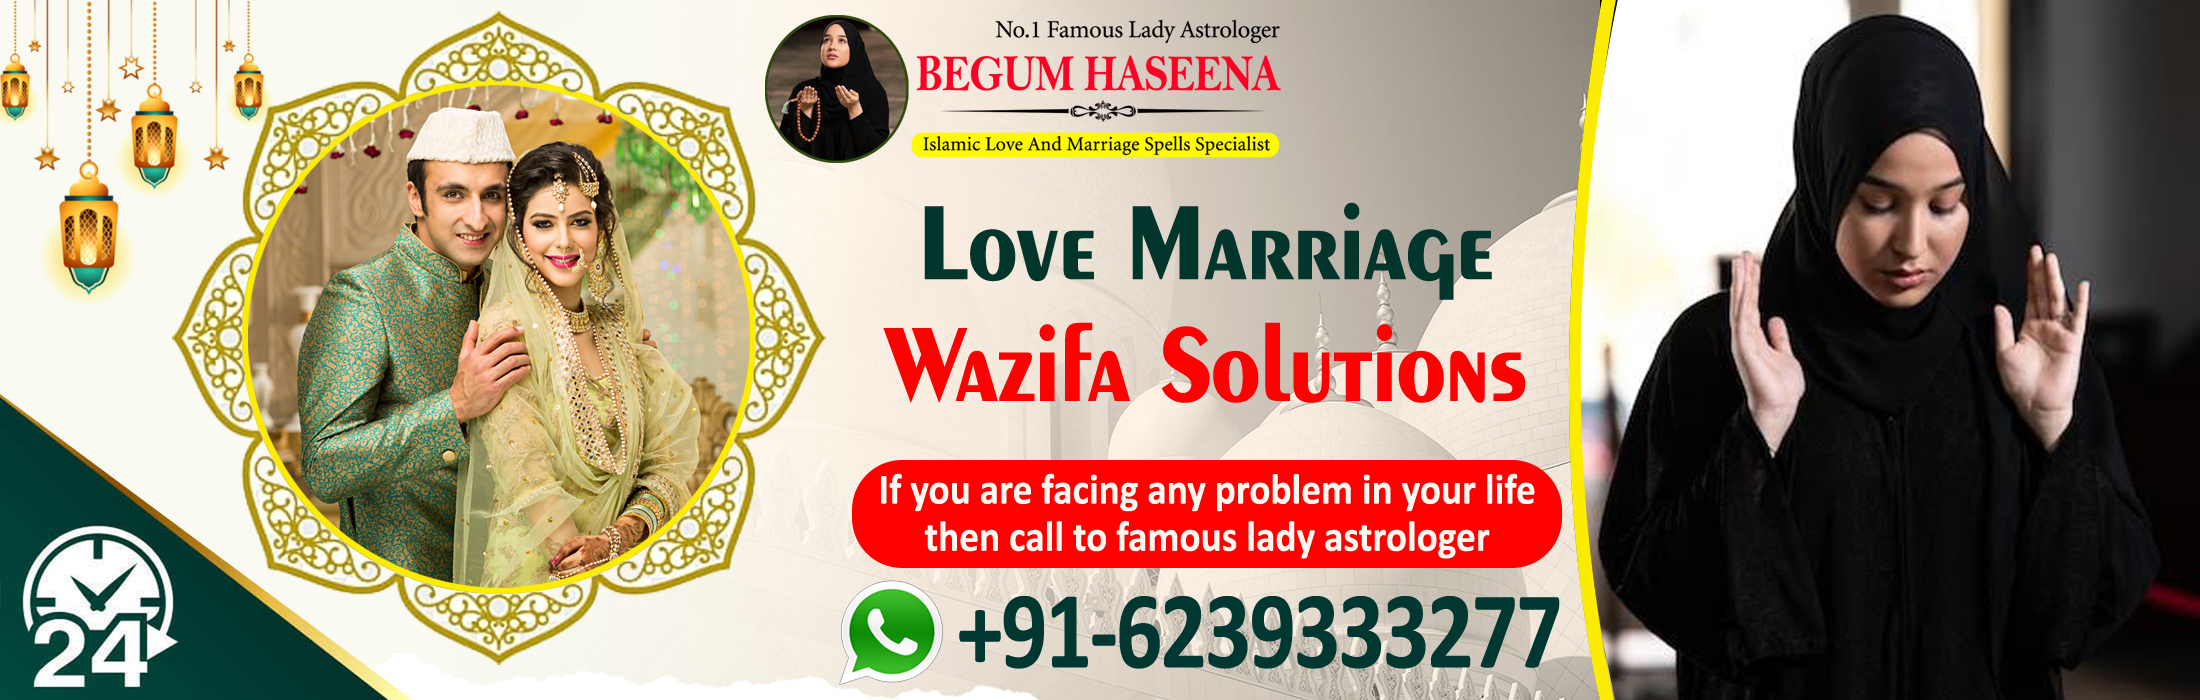 Lady Astrologer Begum Haseena